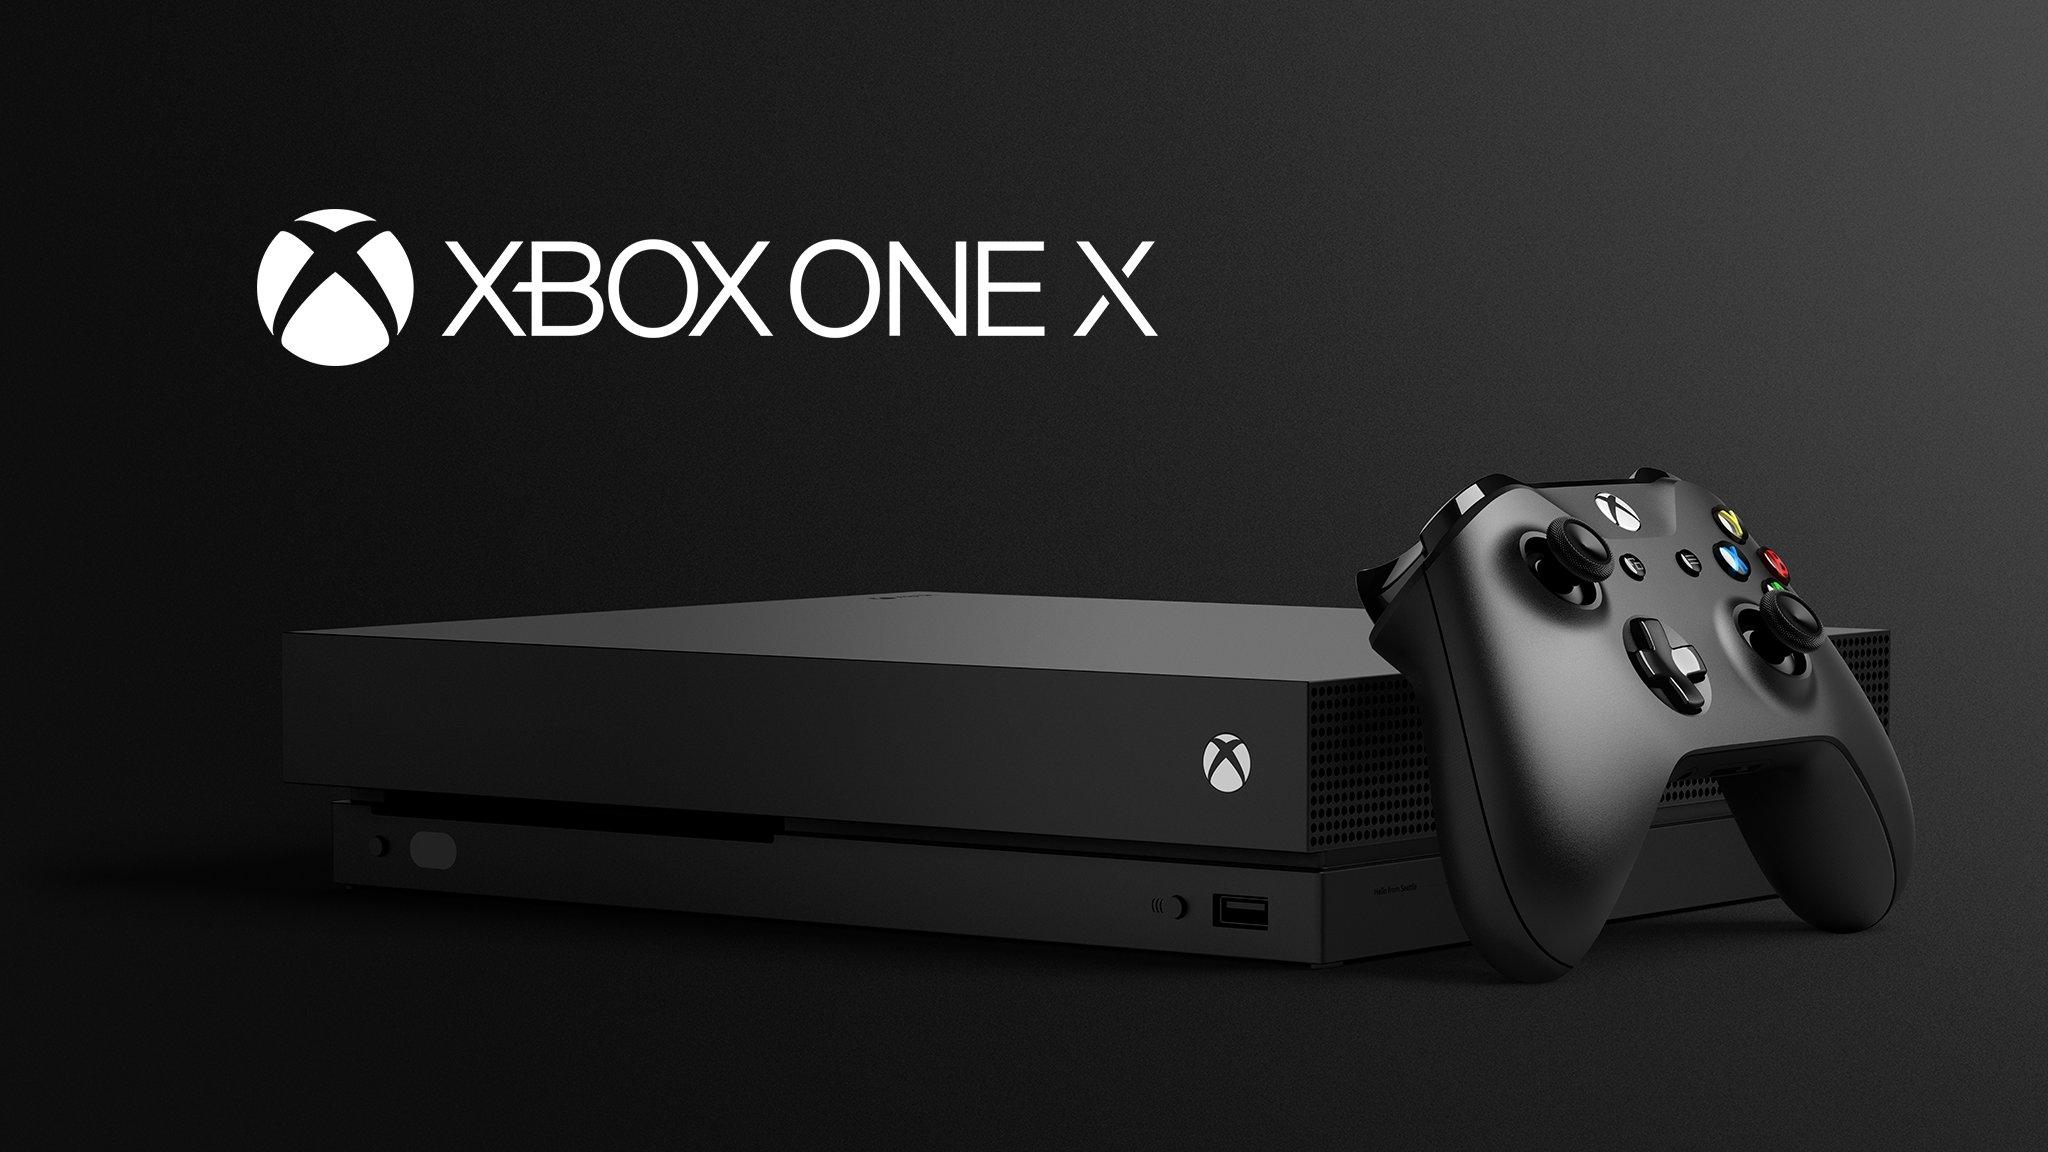 Xbox One X нуждается в эксклюзивах